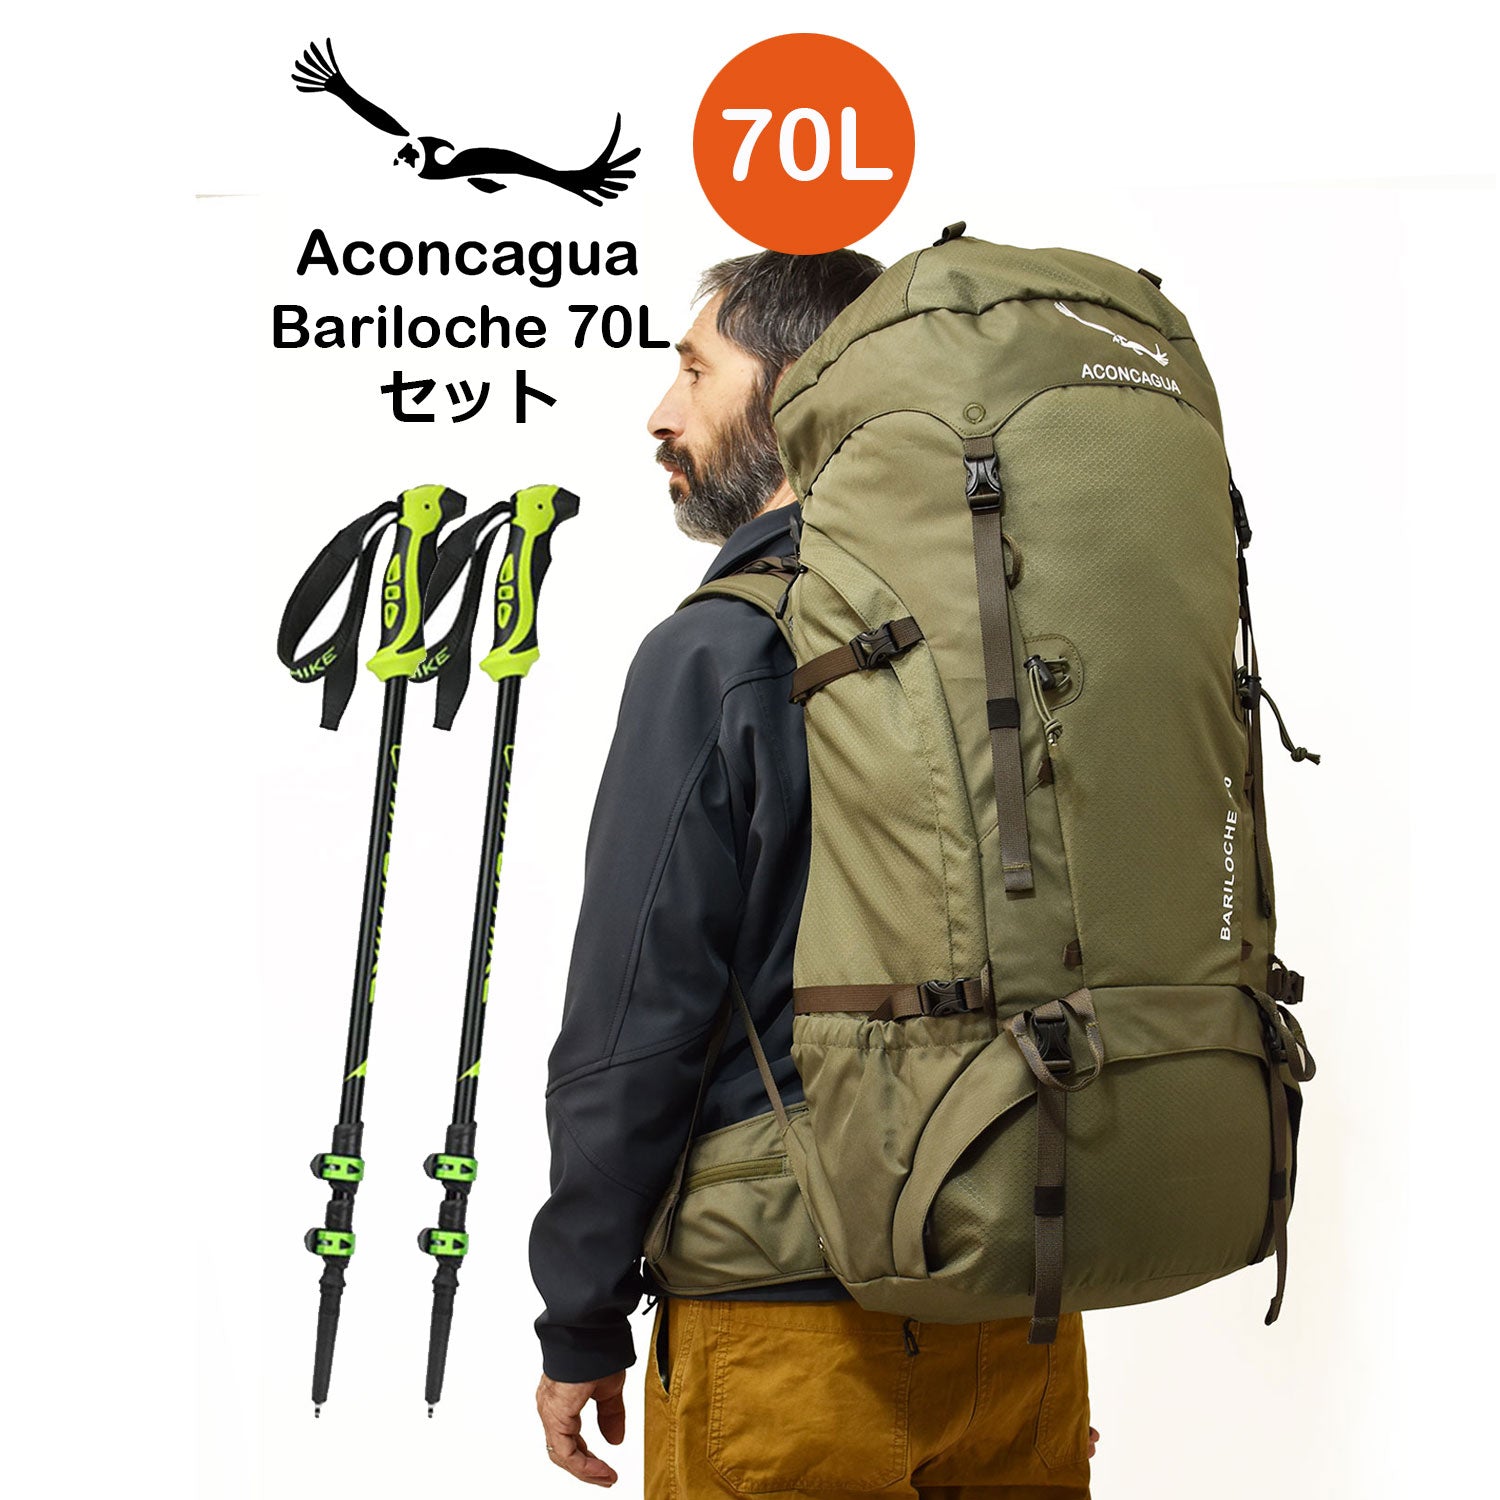 Aconcagua Bariloche70L セット 大型 登山用 リュック 70Lと 